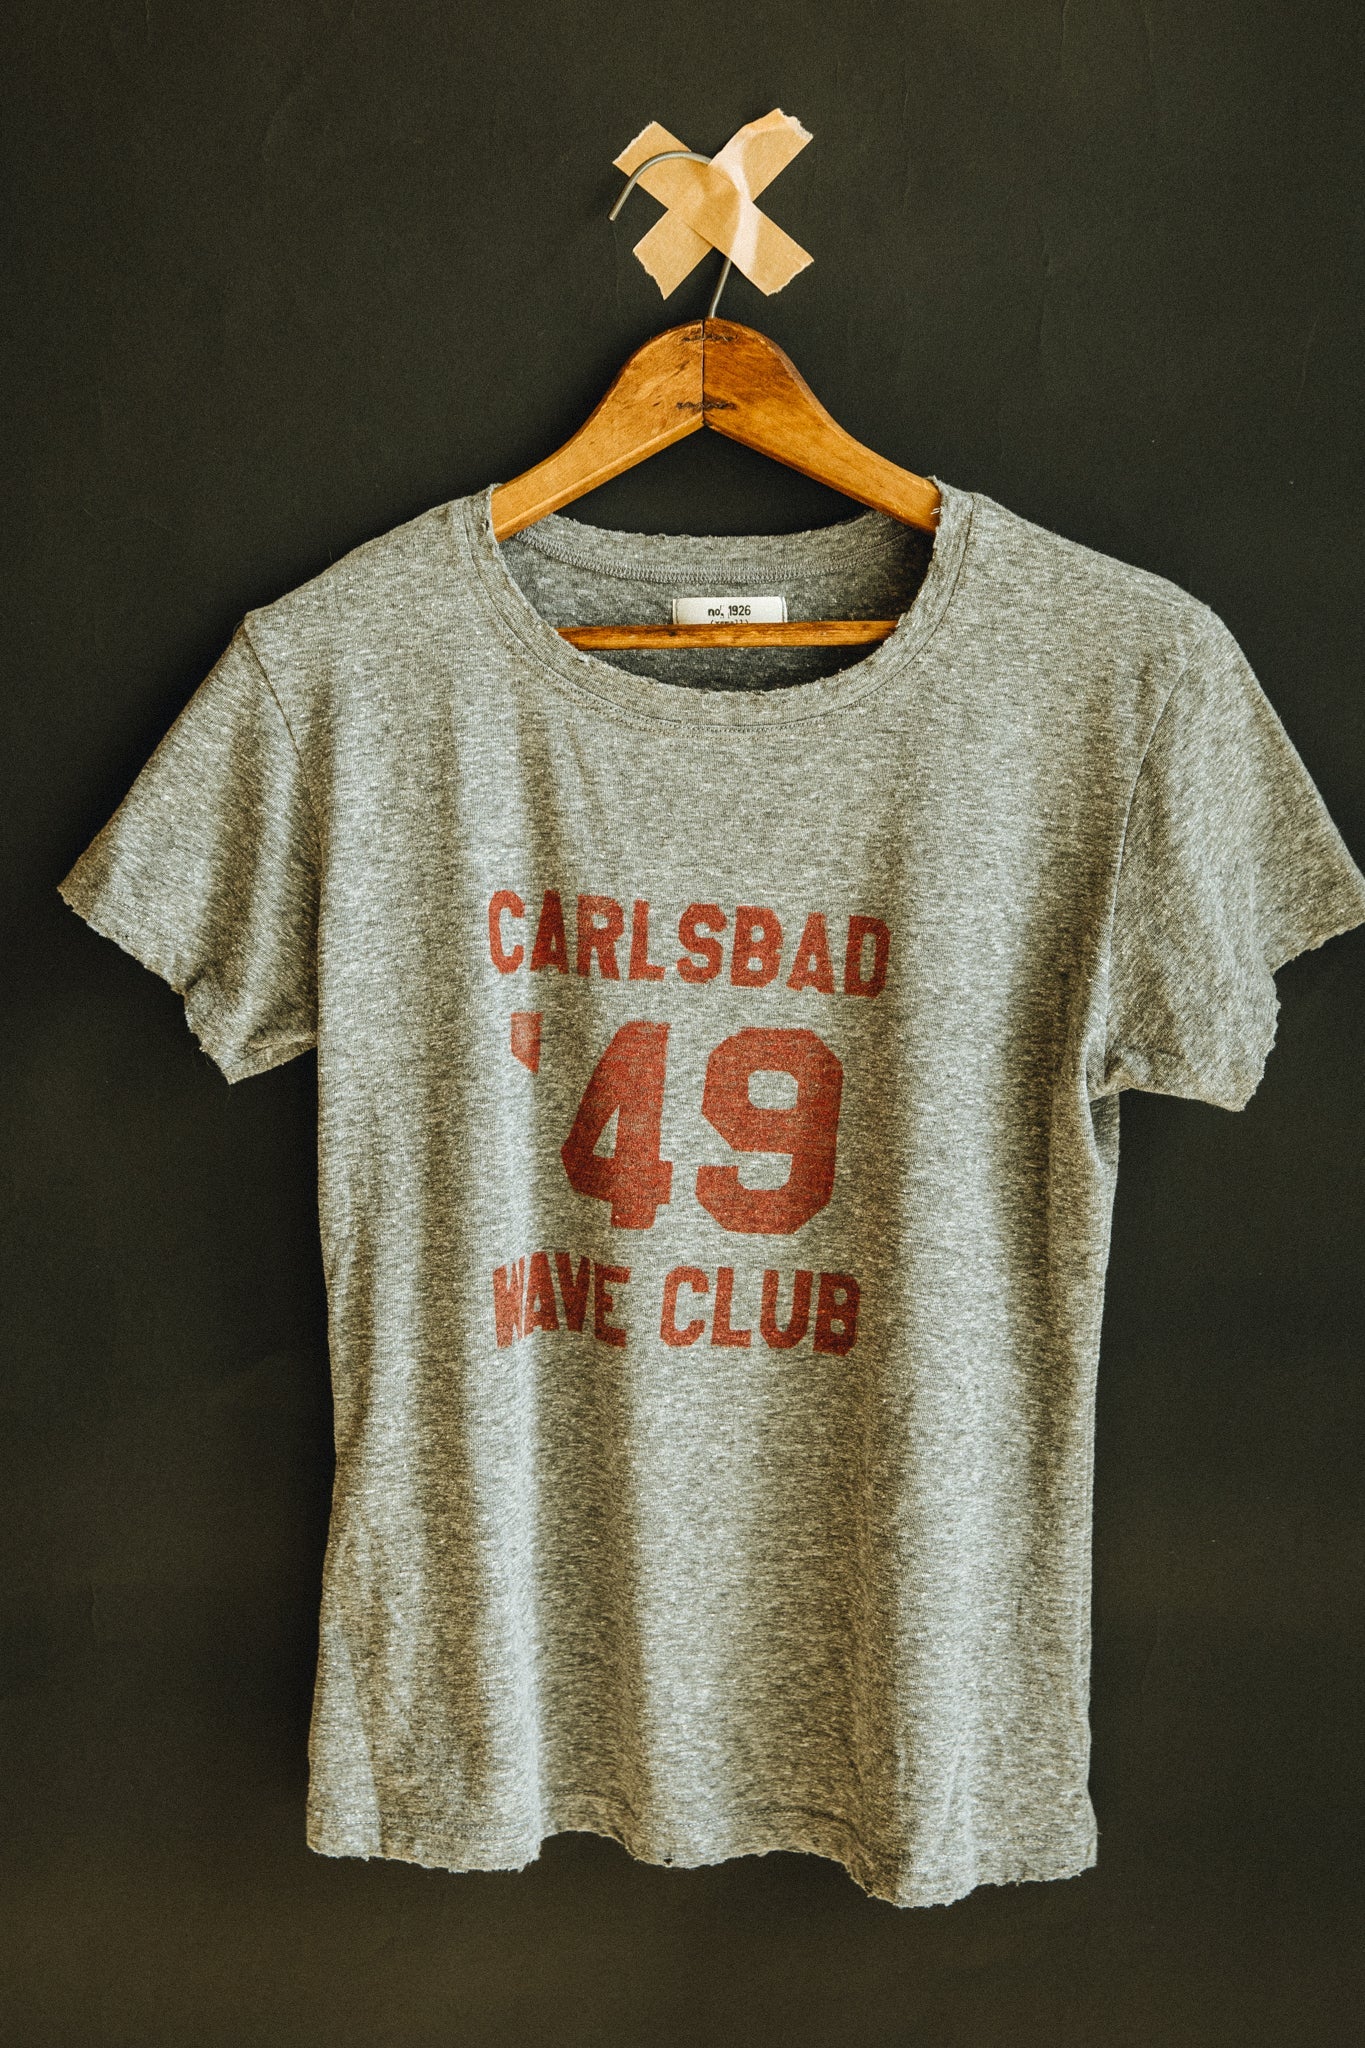 
                  
                    the "carlsbad wave club" tee Tee Number 1926   
                  
                